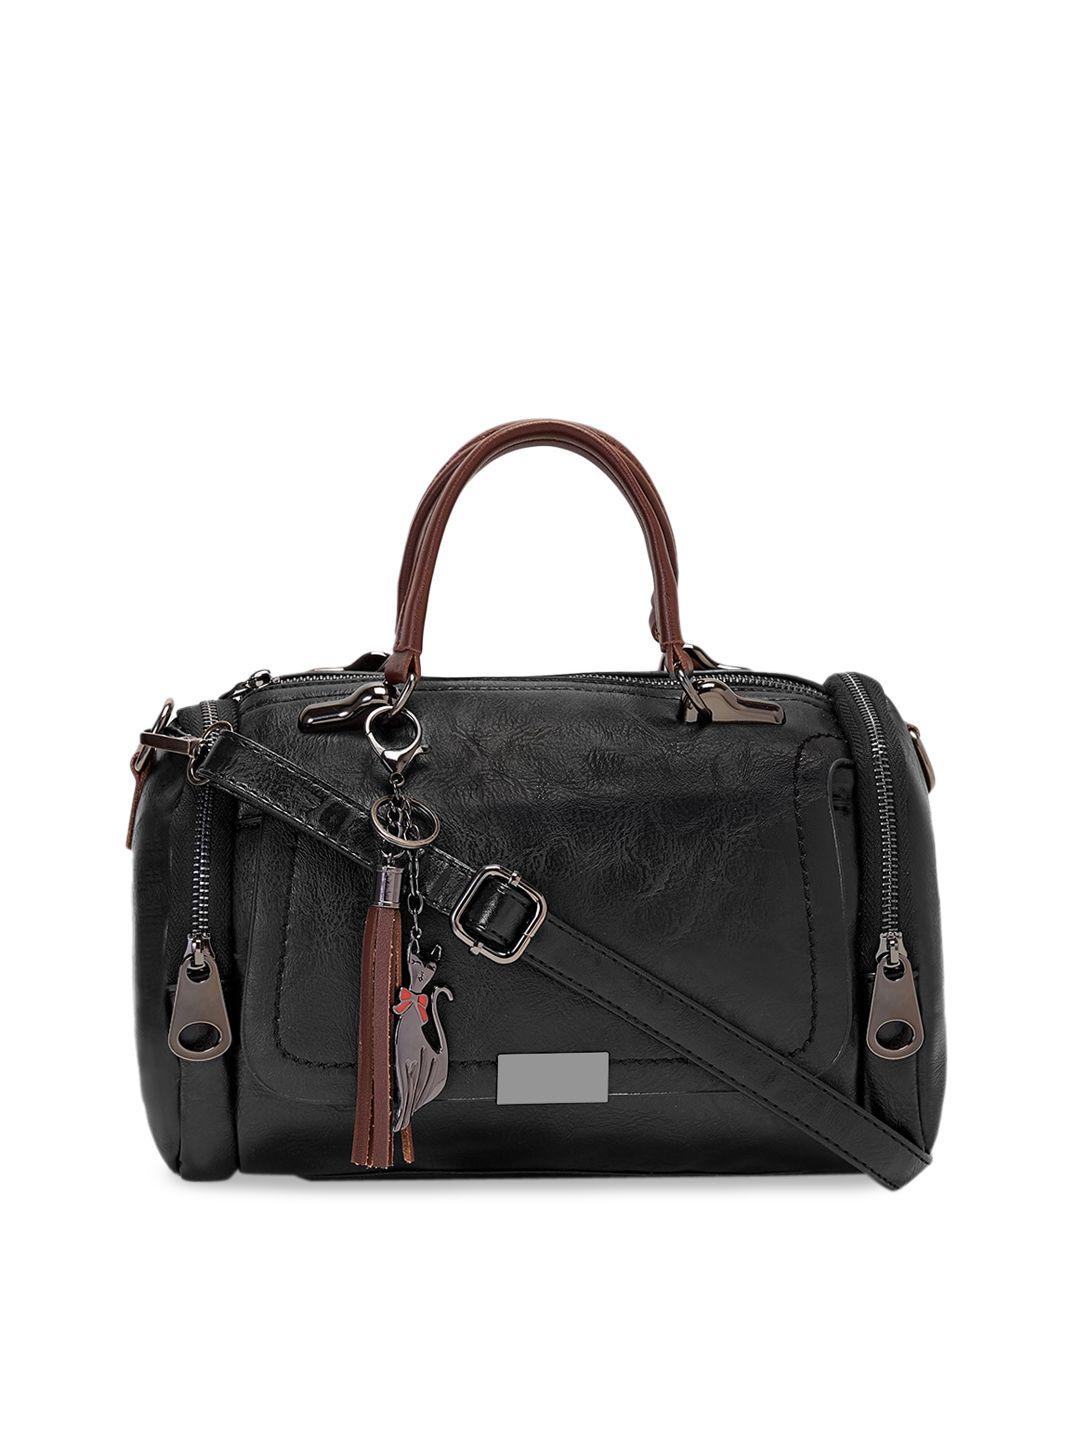 vismiintrend black pu structured handheld box satchel bag